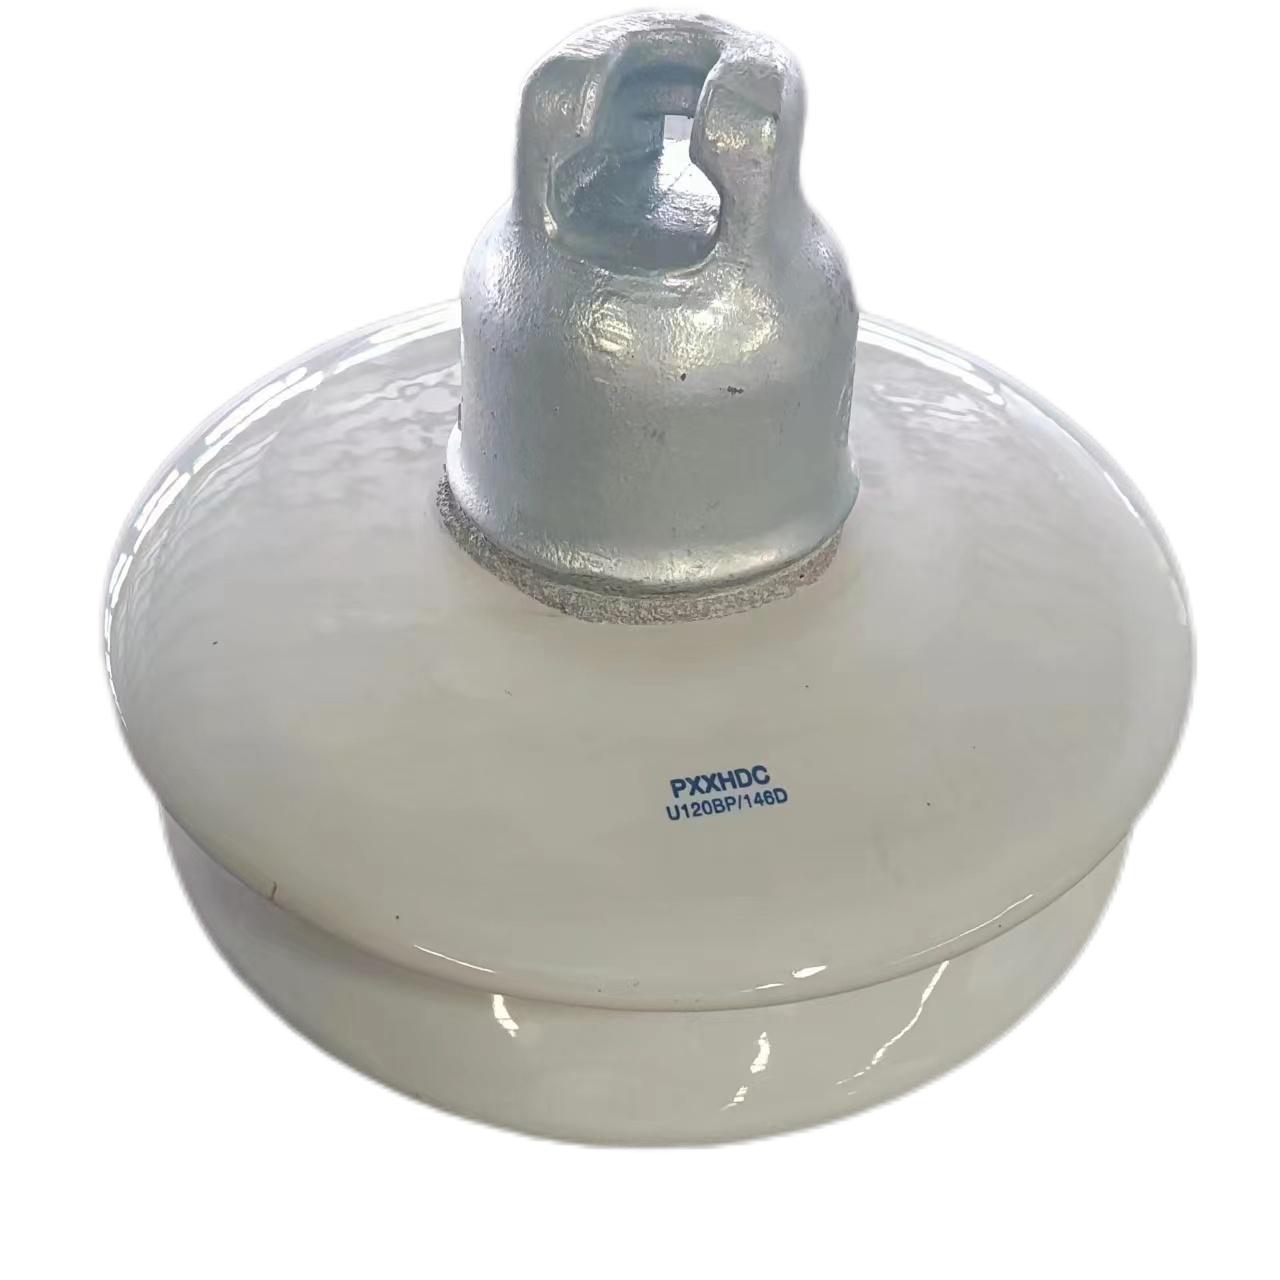 Product name: U120BP/146 anti-pollution disc suspension porcelain insulator